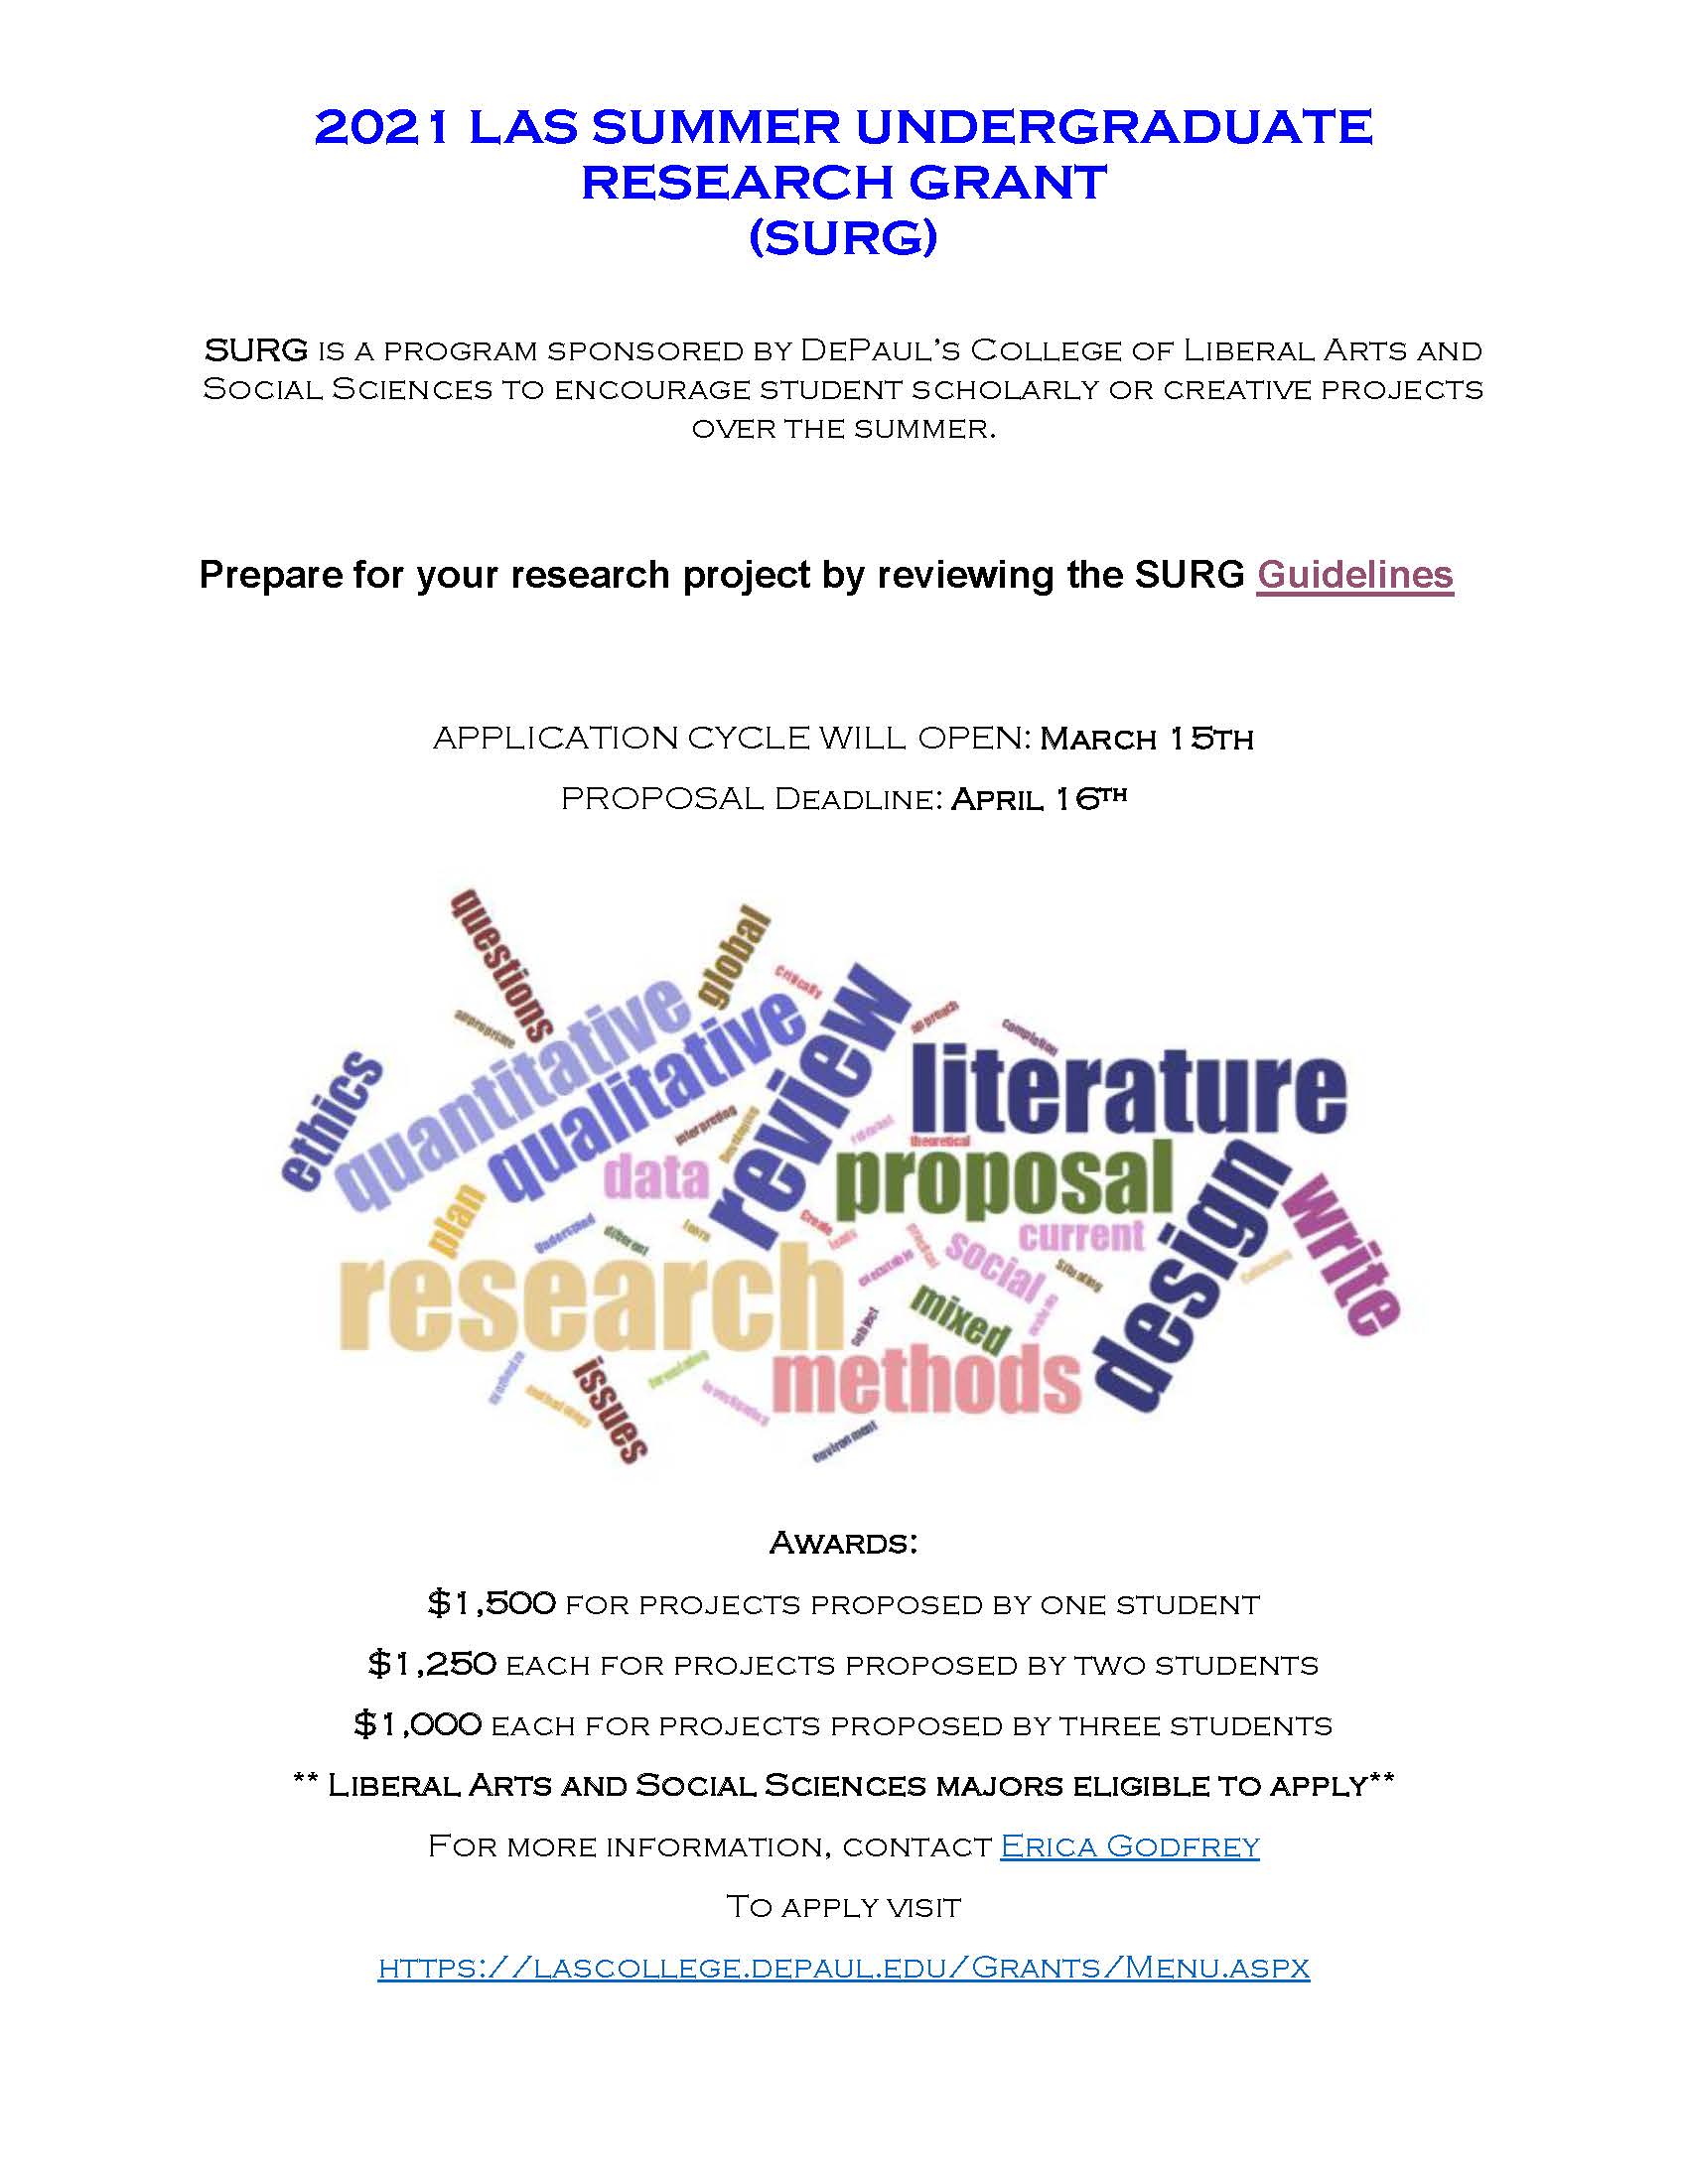 undergraduate research grant